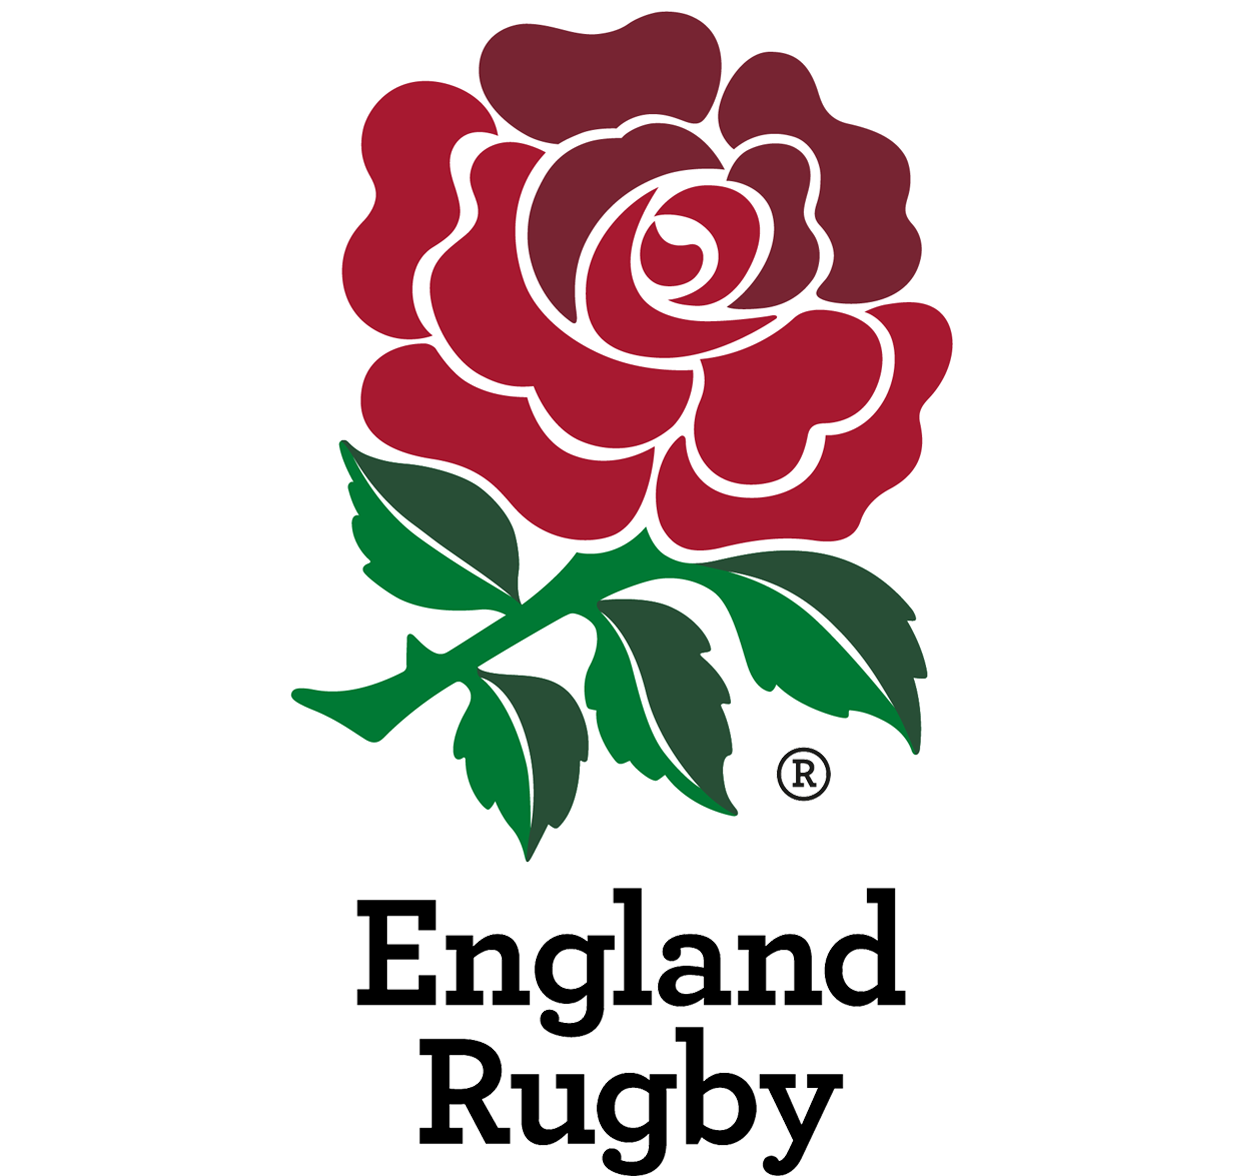 England Crest Image